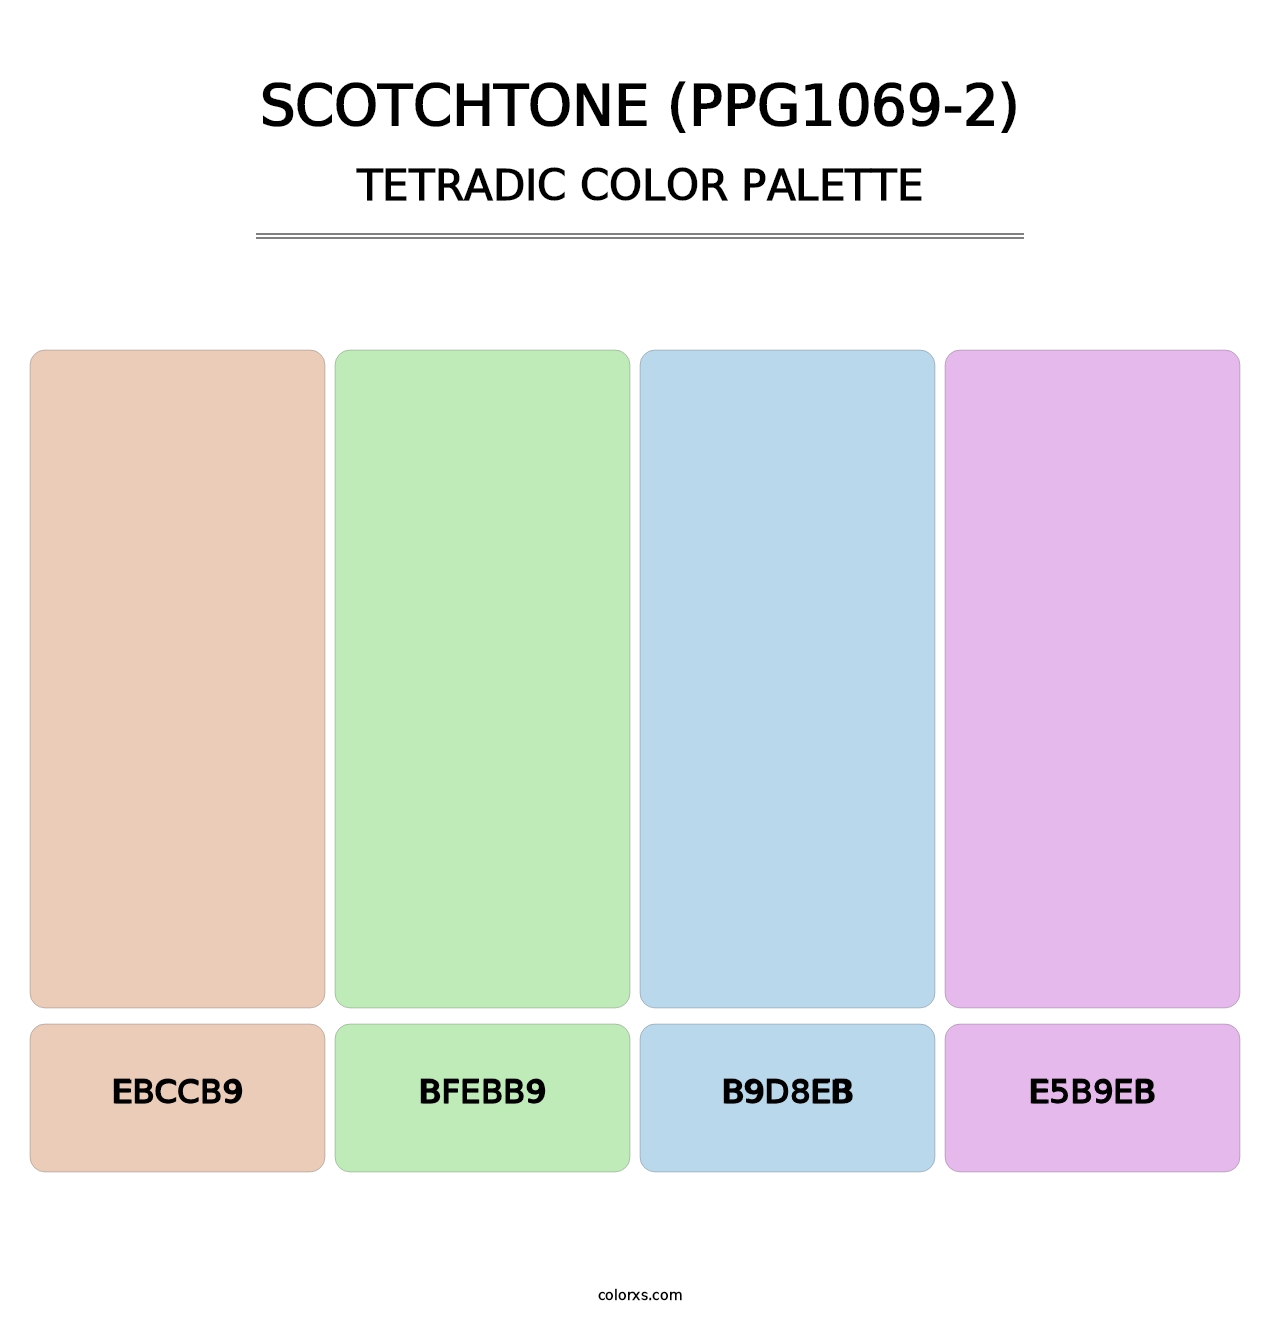 Scotchtone (PPG1069-2) - Tetradic Color Palette